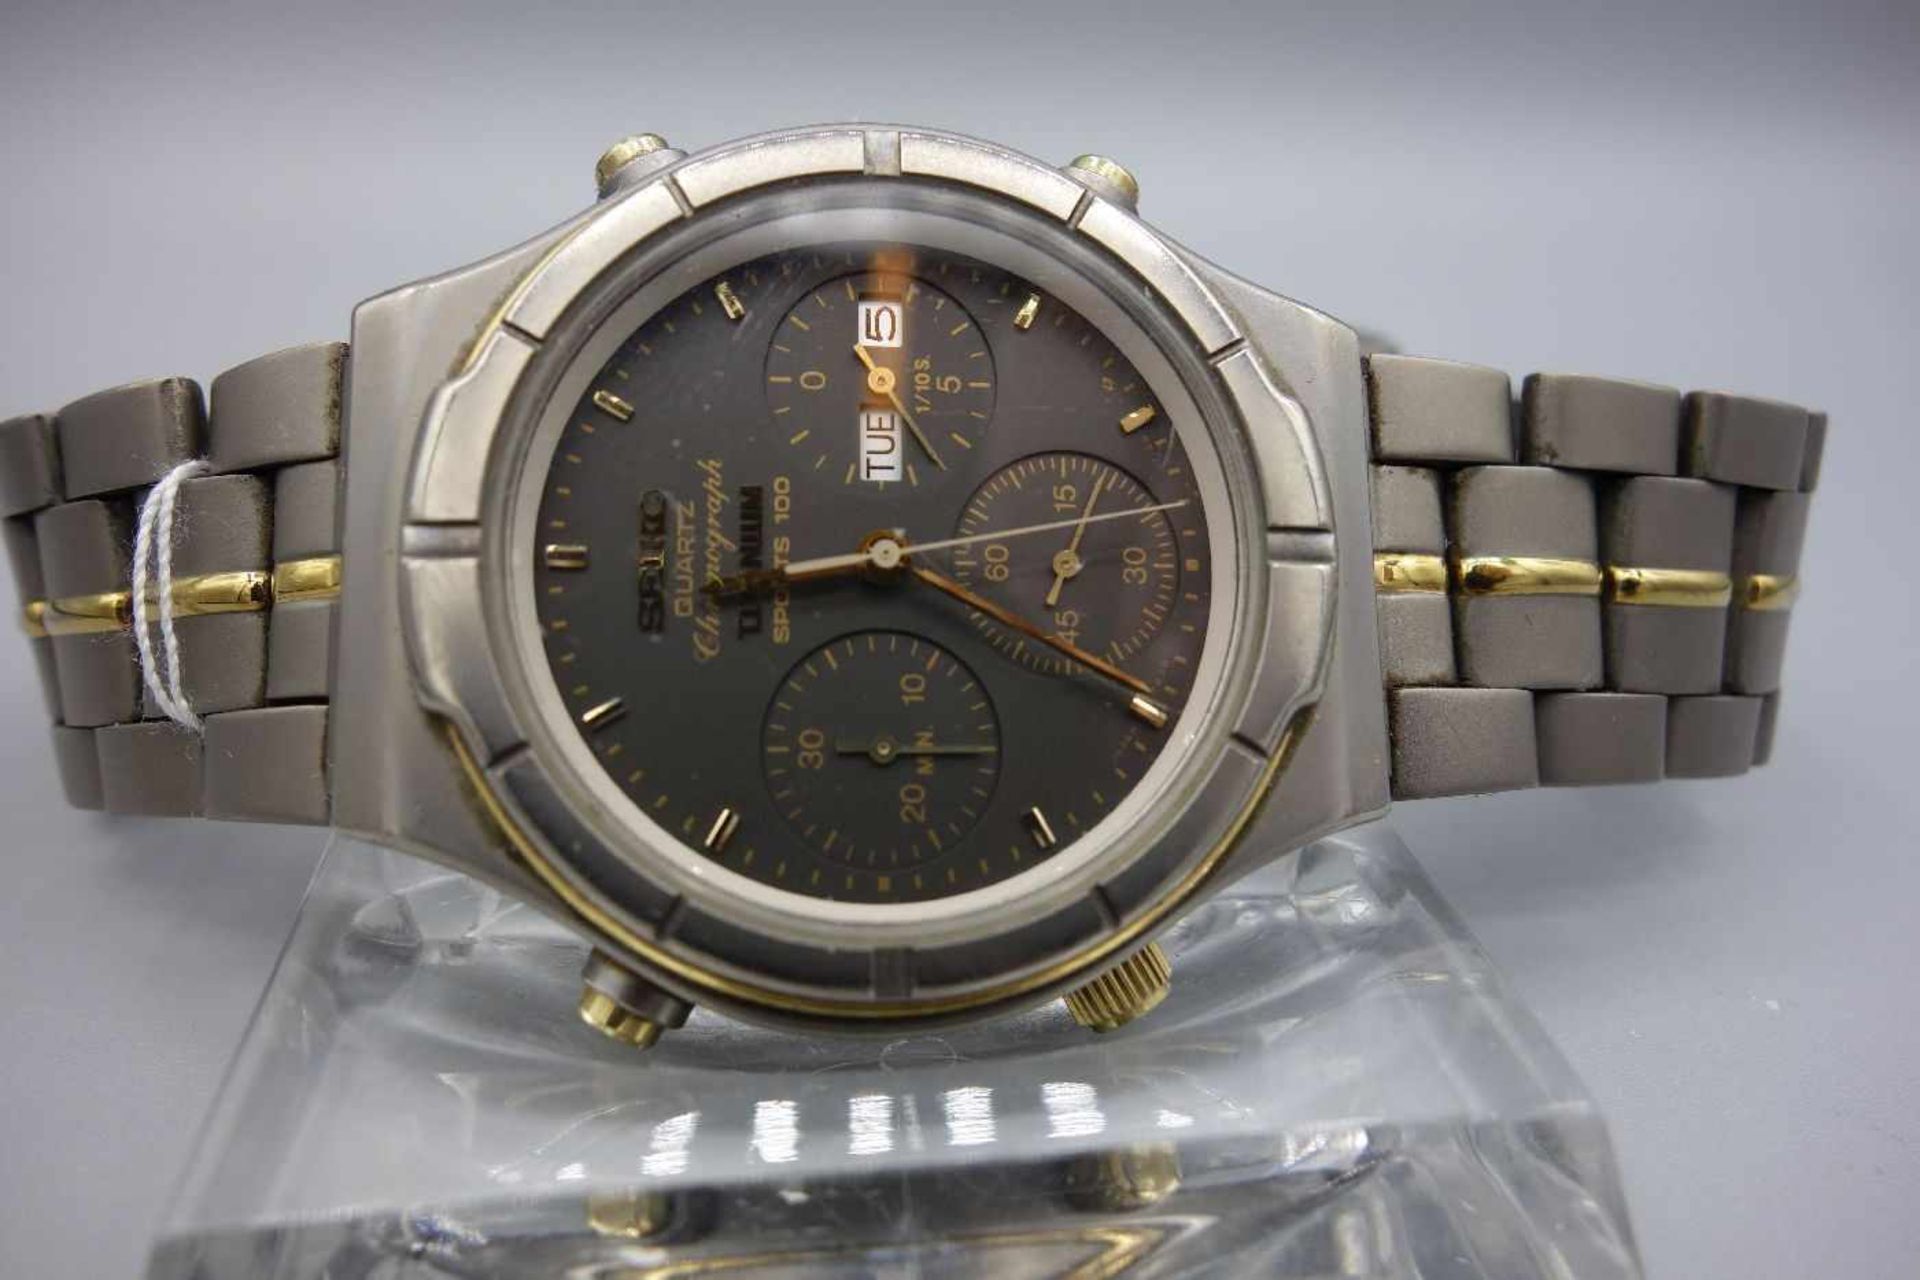 ARMBANDUHR: SEIKO CHRONOGRAPH TITANIUM SPORTS 100 / wristwatch, Japan, Quartz. Stahlgehäuse und - Bild 2 aus 7